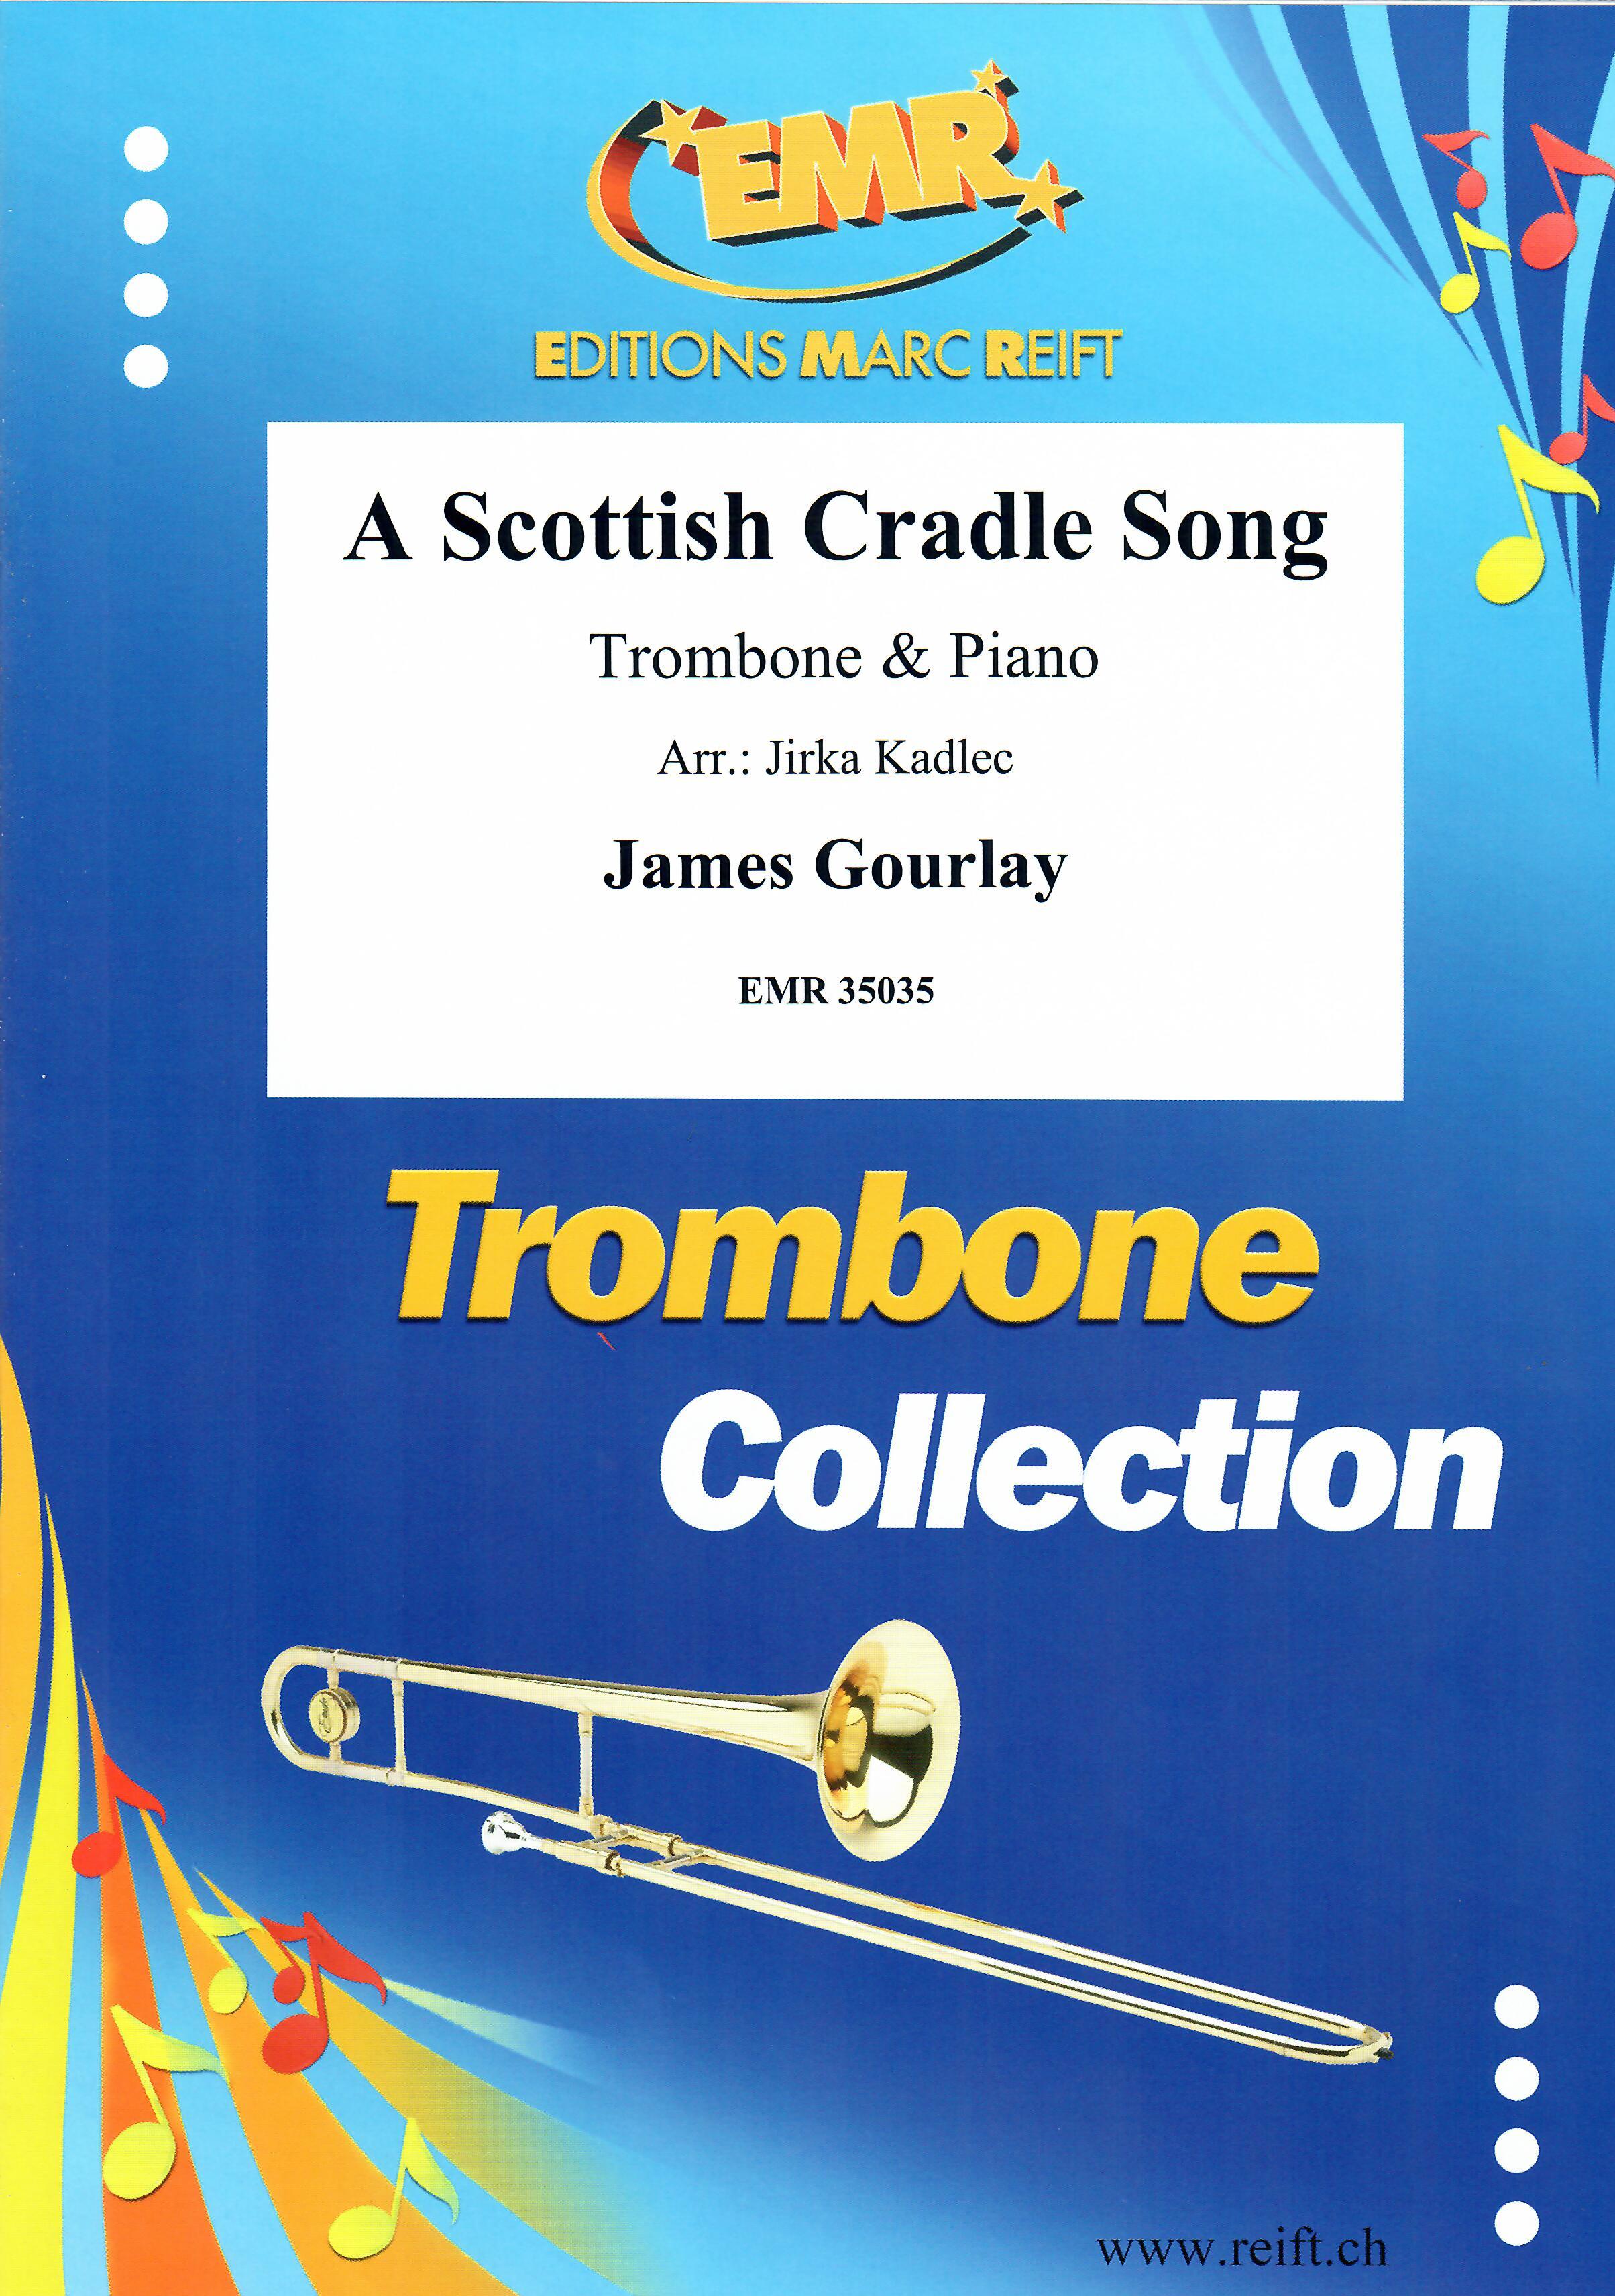 A SCOTTISH CRADLE SONG, SOLOS - Trombone